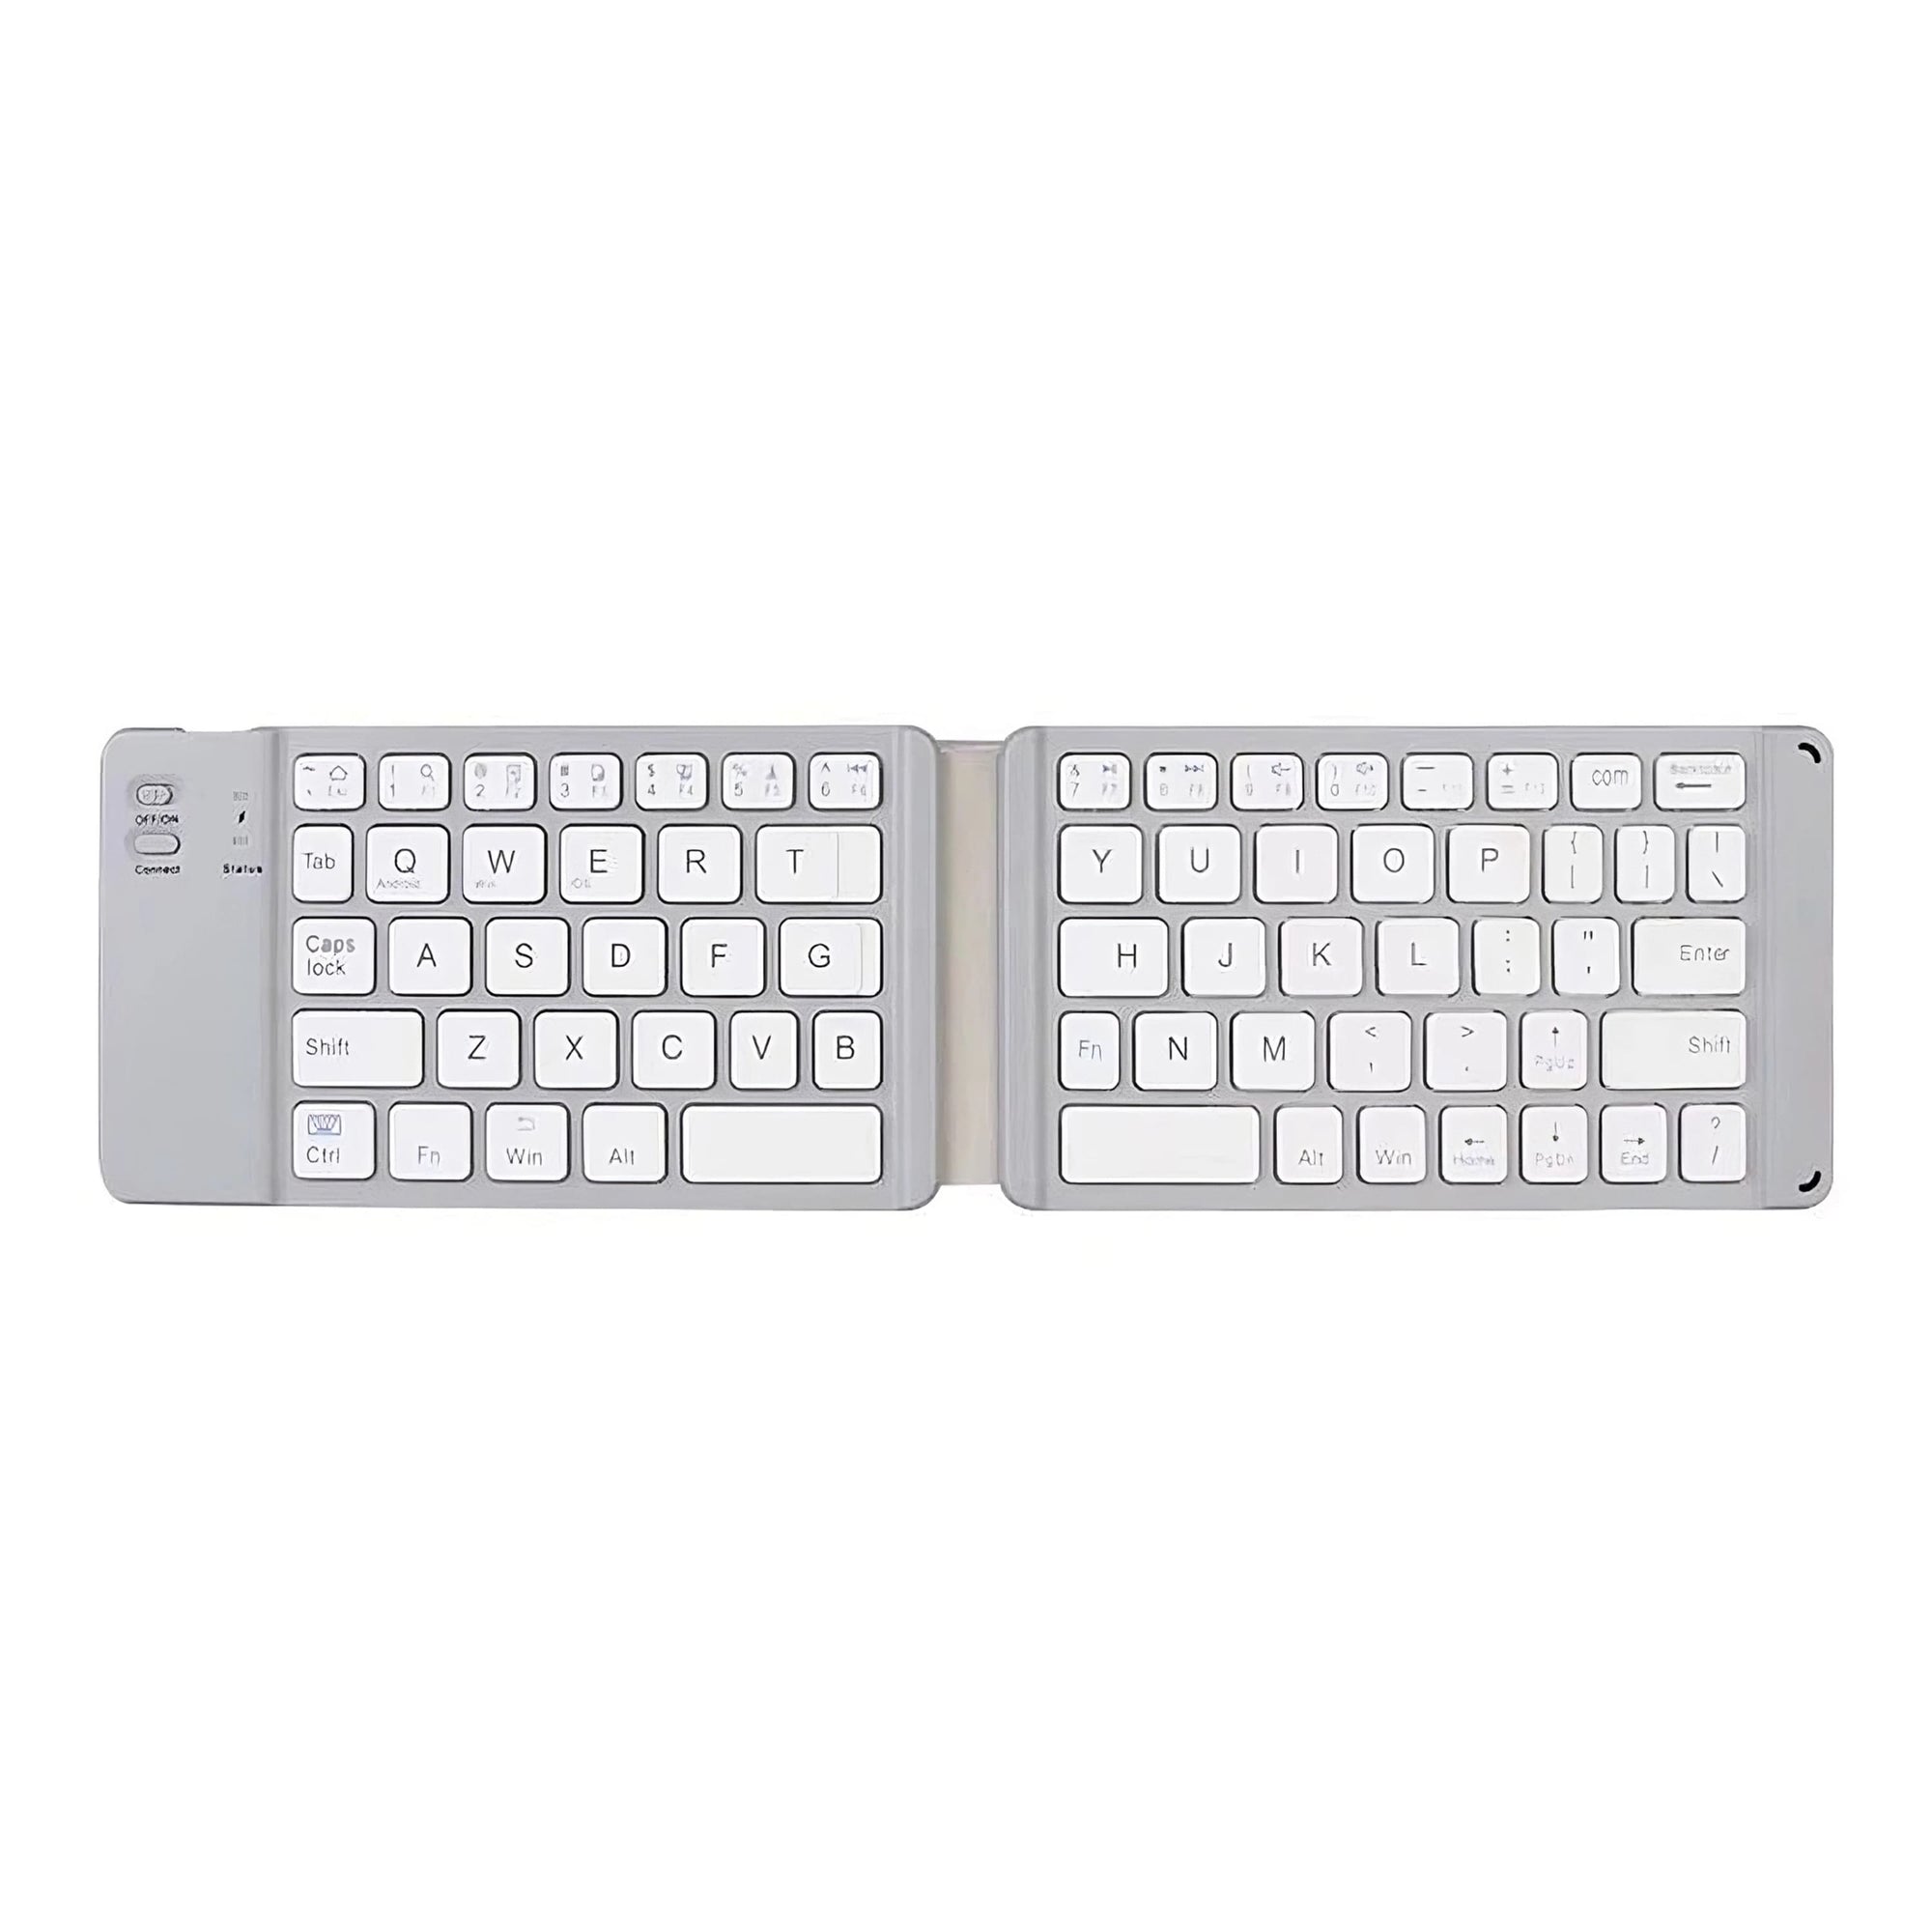 Portable light-handy mini wireless bluetooth folding keyboard foldable wireless keypad for ios/android/windows ipad tablet and phone - free